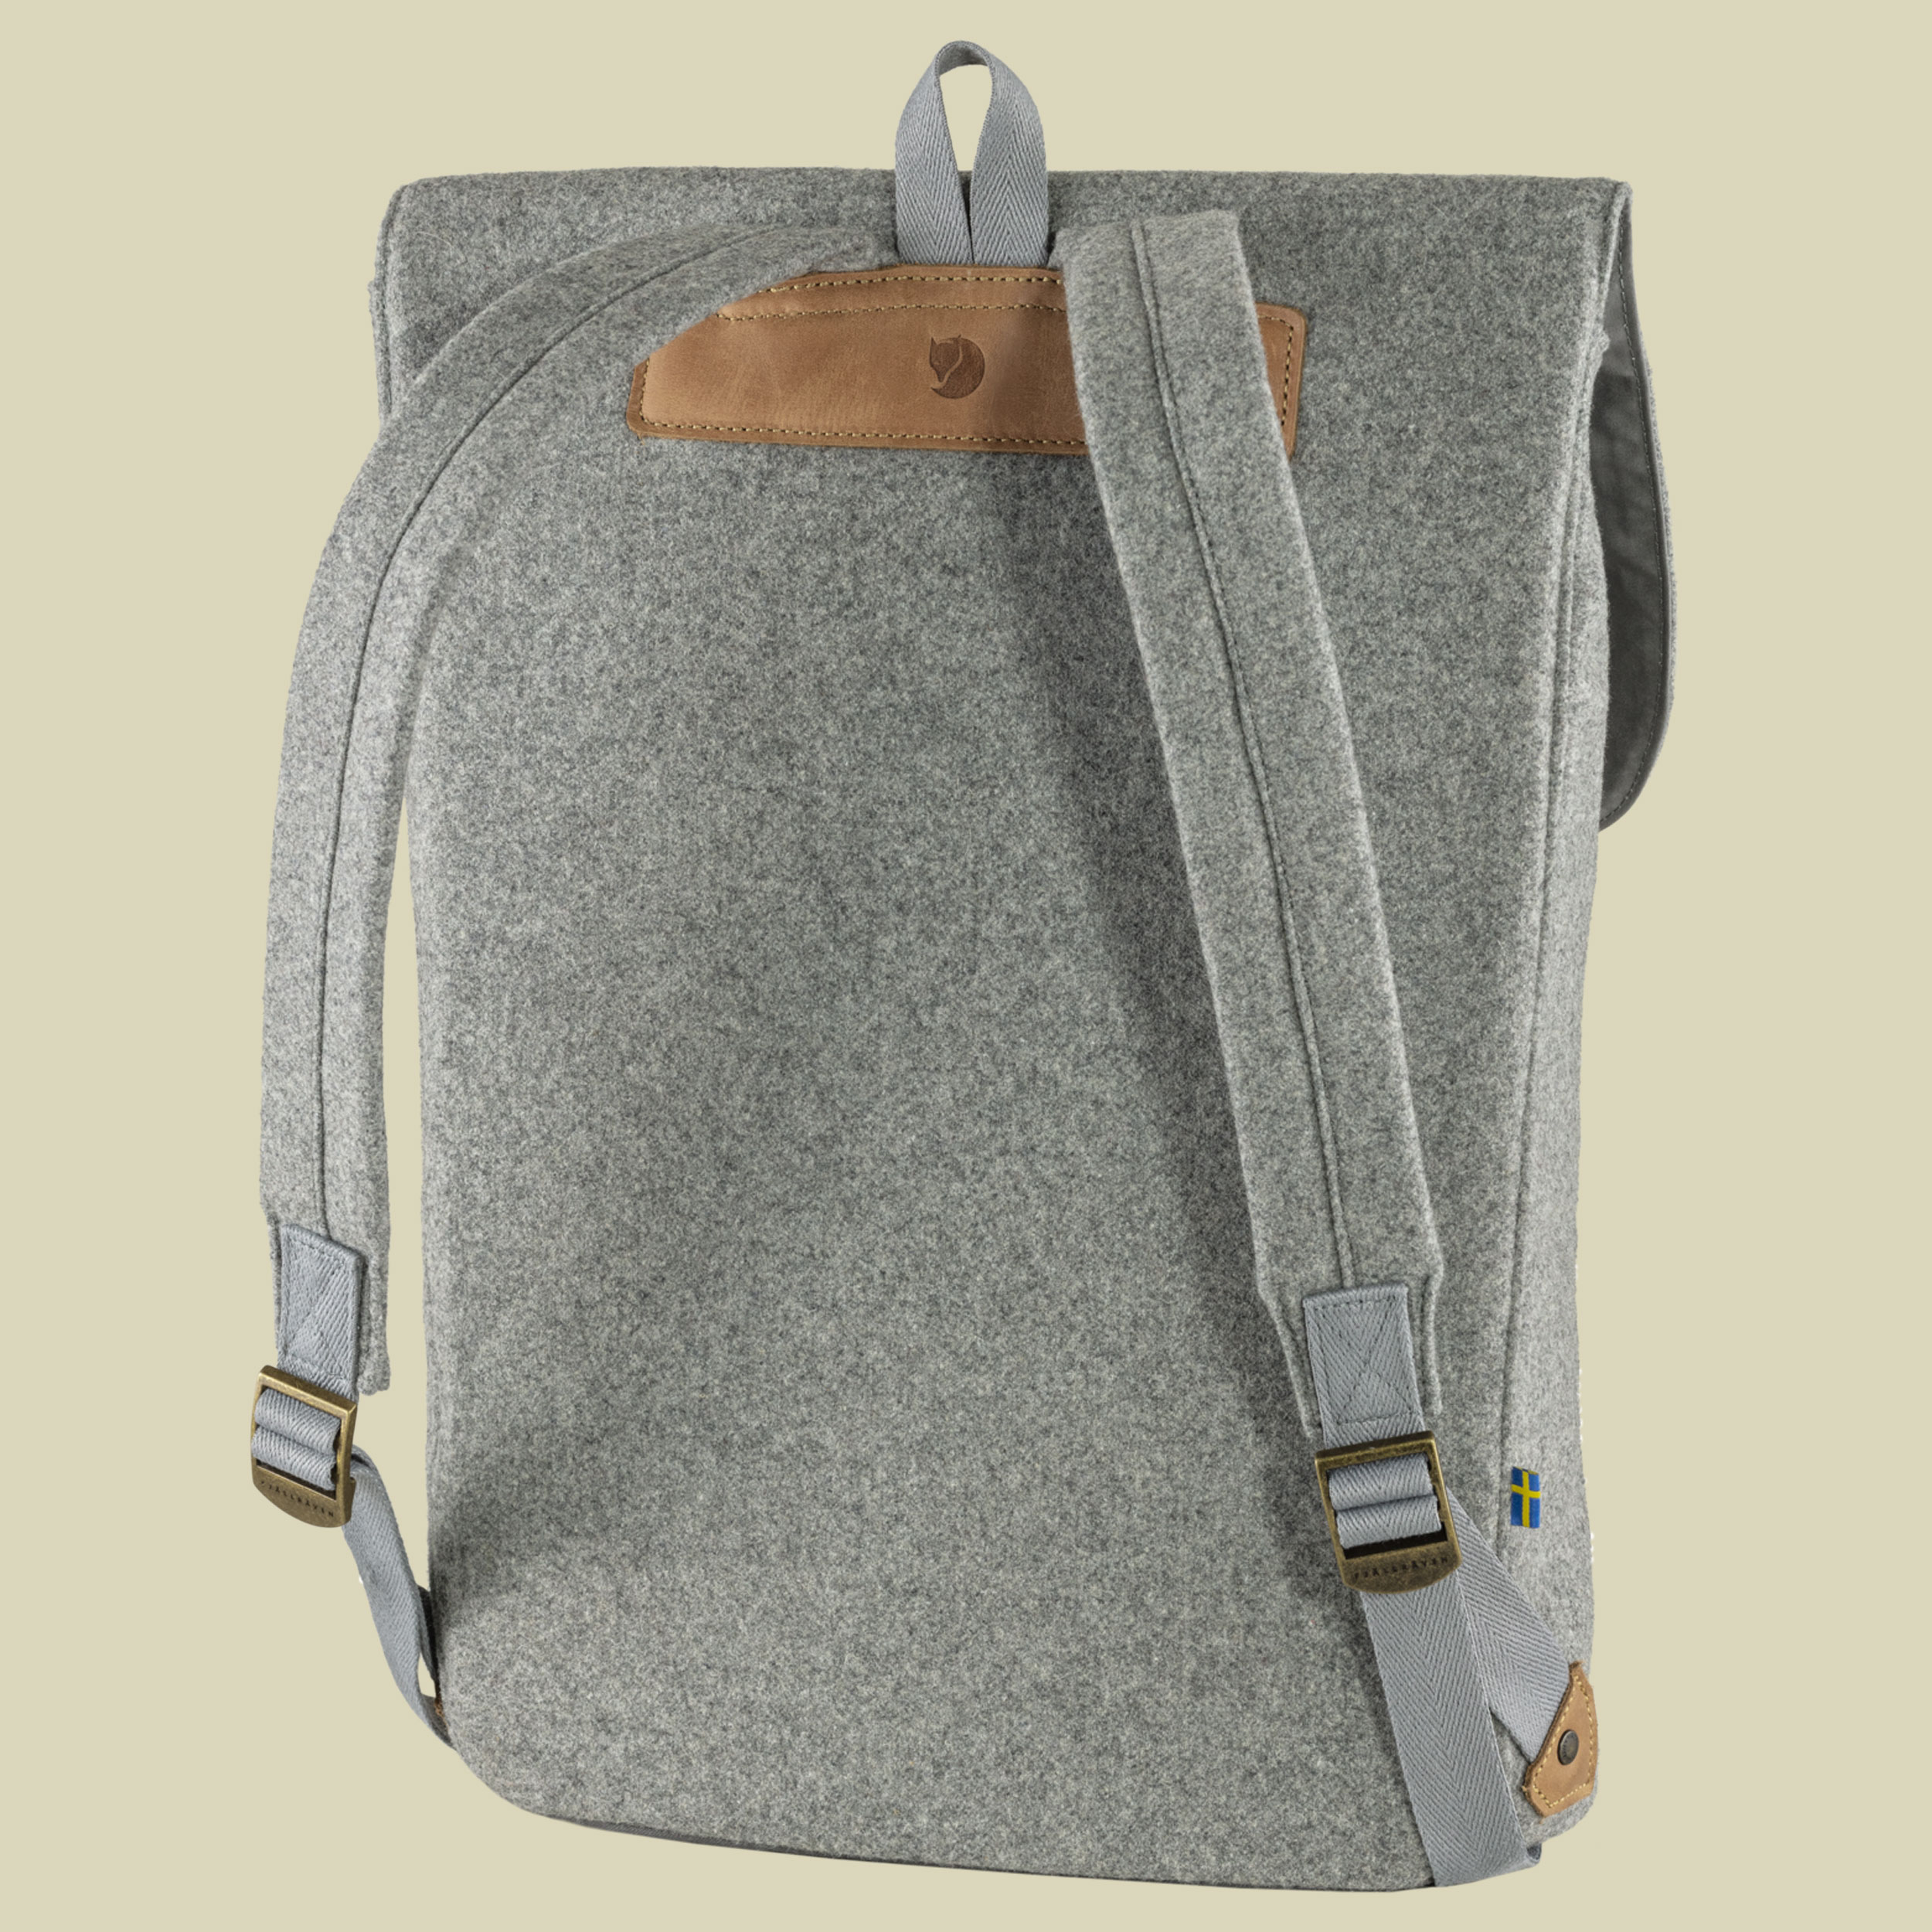 Norrvage Foldsack Volumen 16 Farbe granite grey